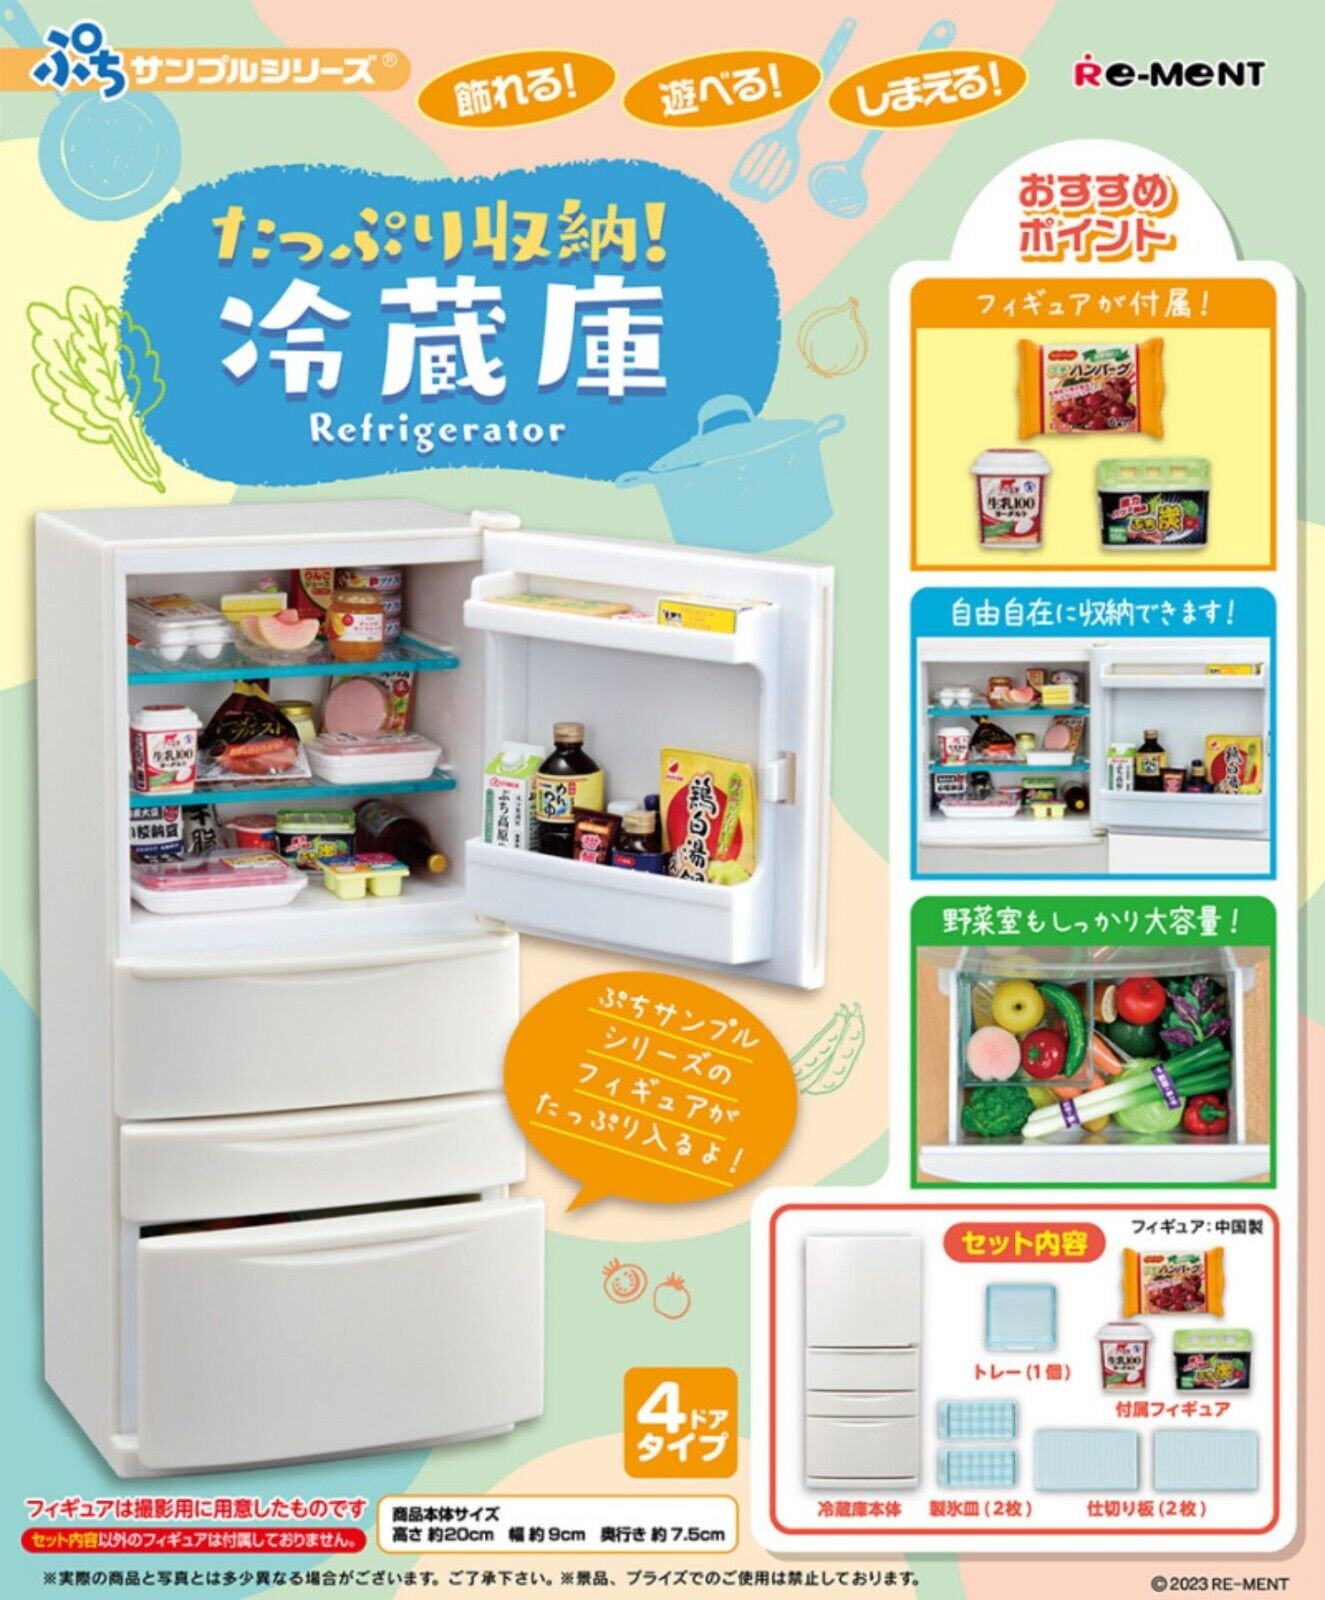 Re-ment Plenty of storage Refrigerator mini figure Toy / home appliances Japan